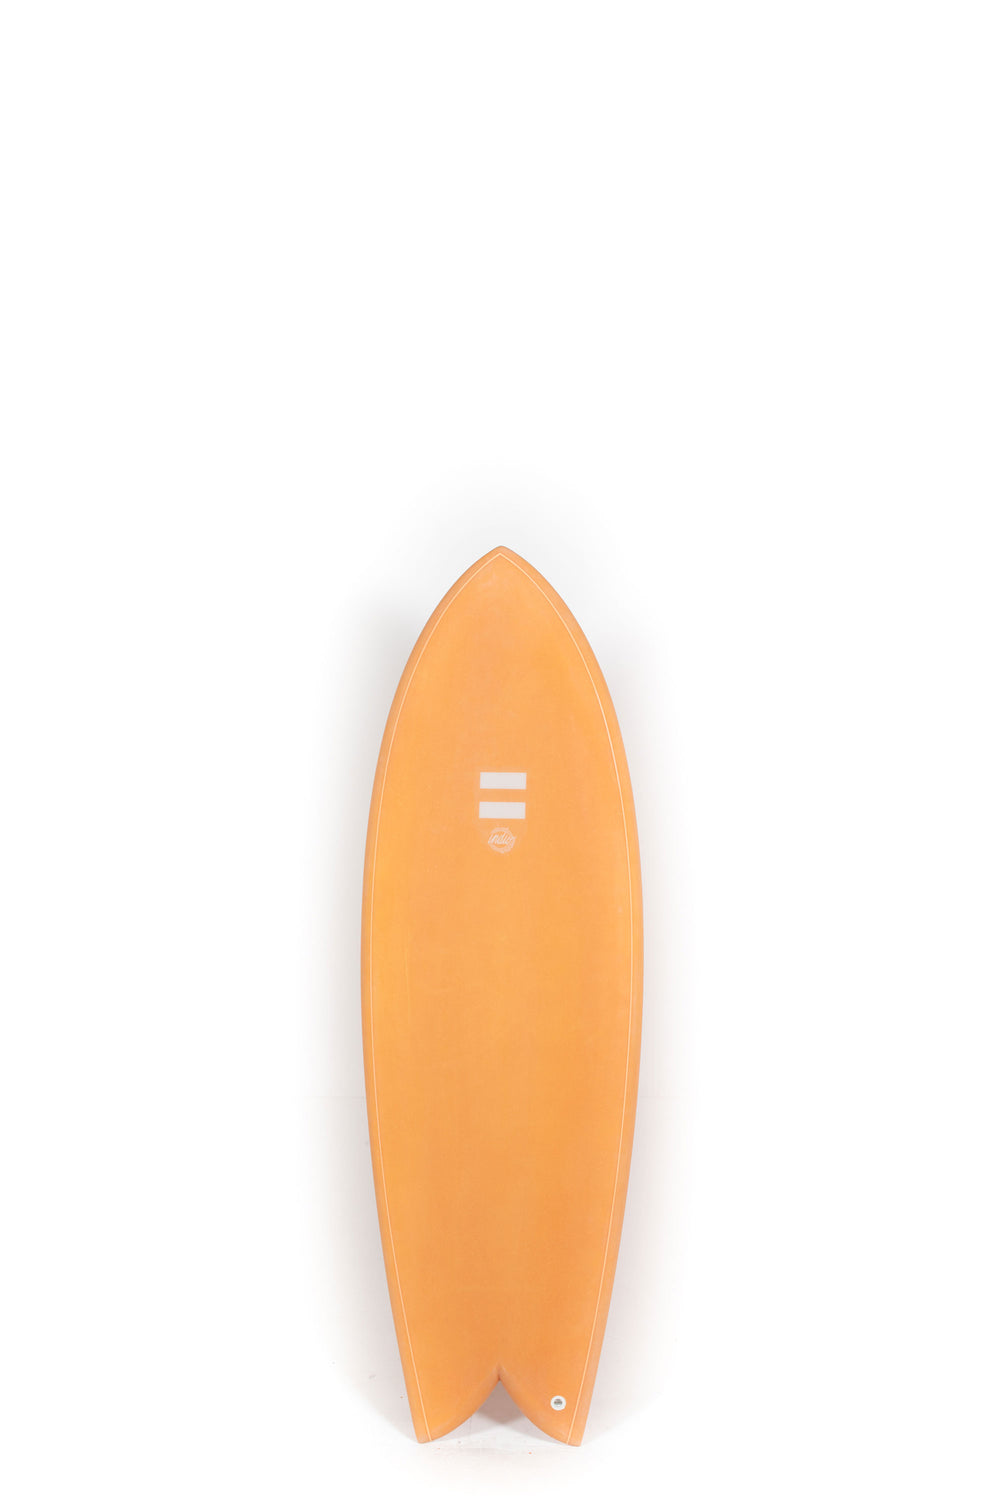 Pukas Surf Shop -  Indio Surfboards - DAB TERRACOTA FCS II - 5’7” x 21 x 2 1/2 x 35.80L.